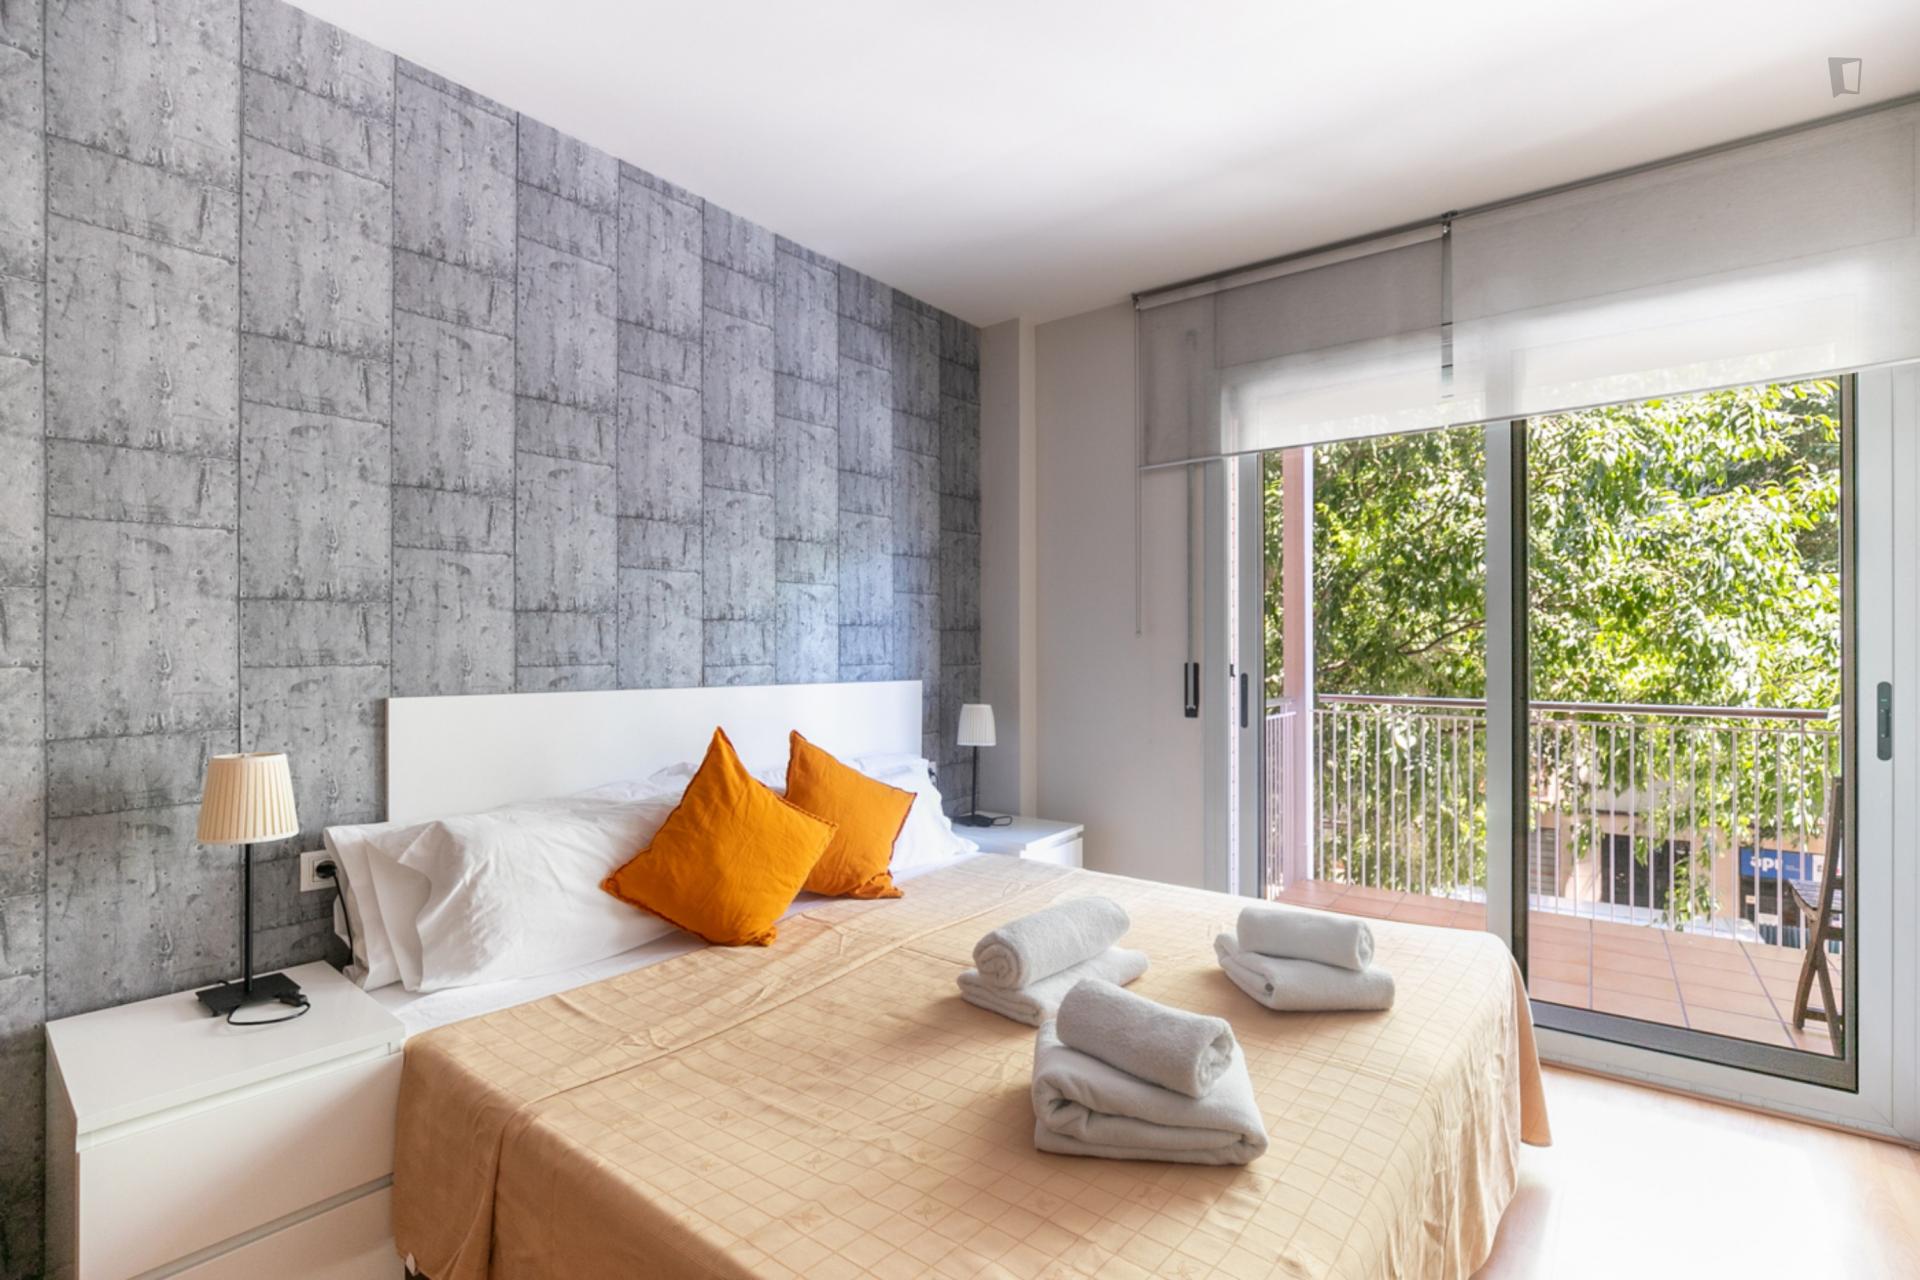 Industria - Modern furnished flat in Barcelona